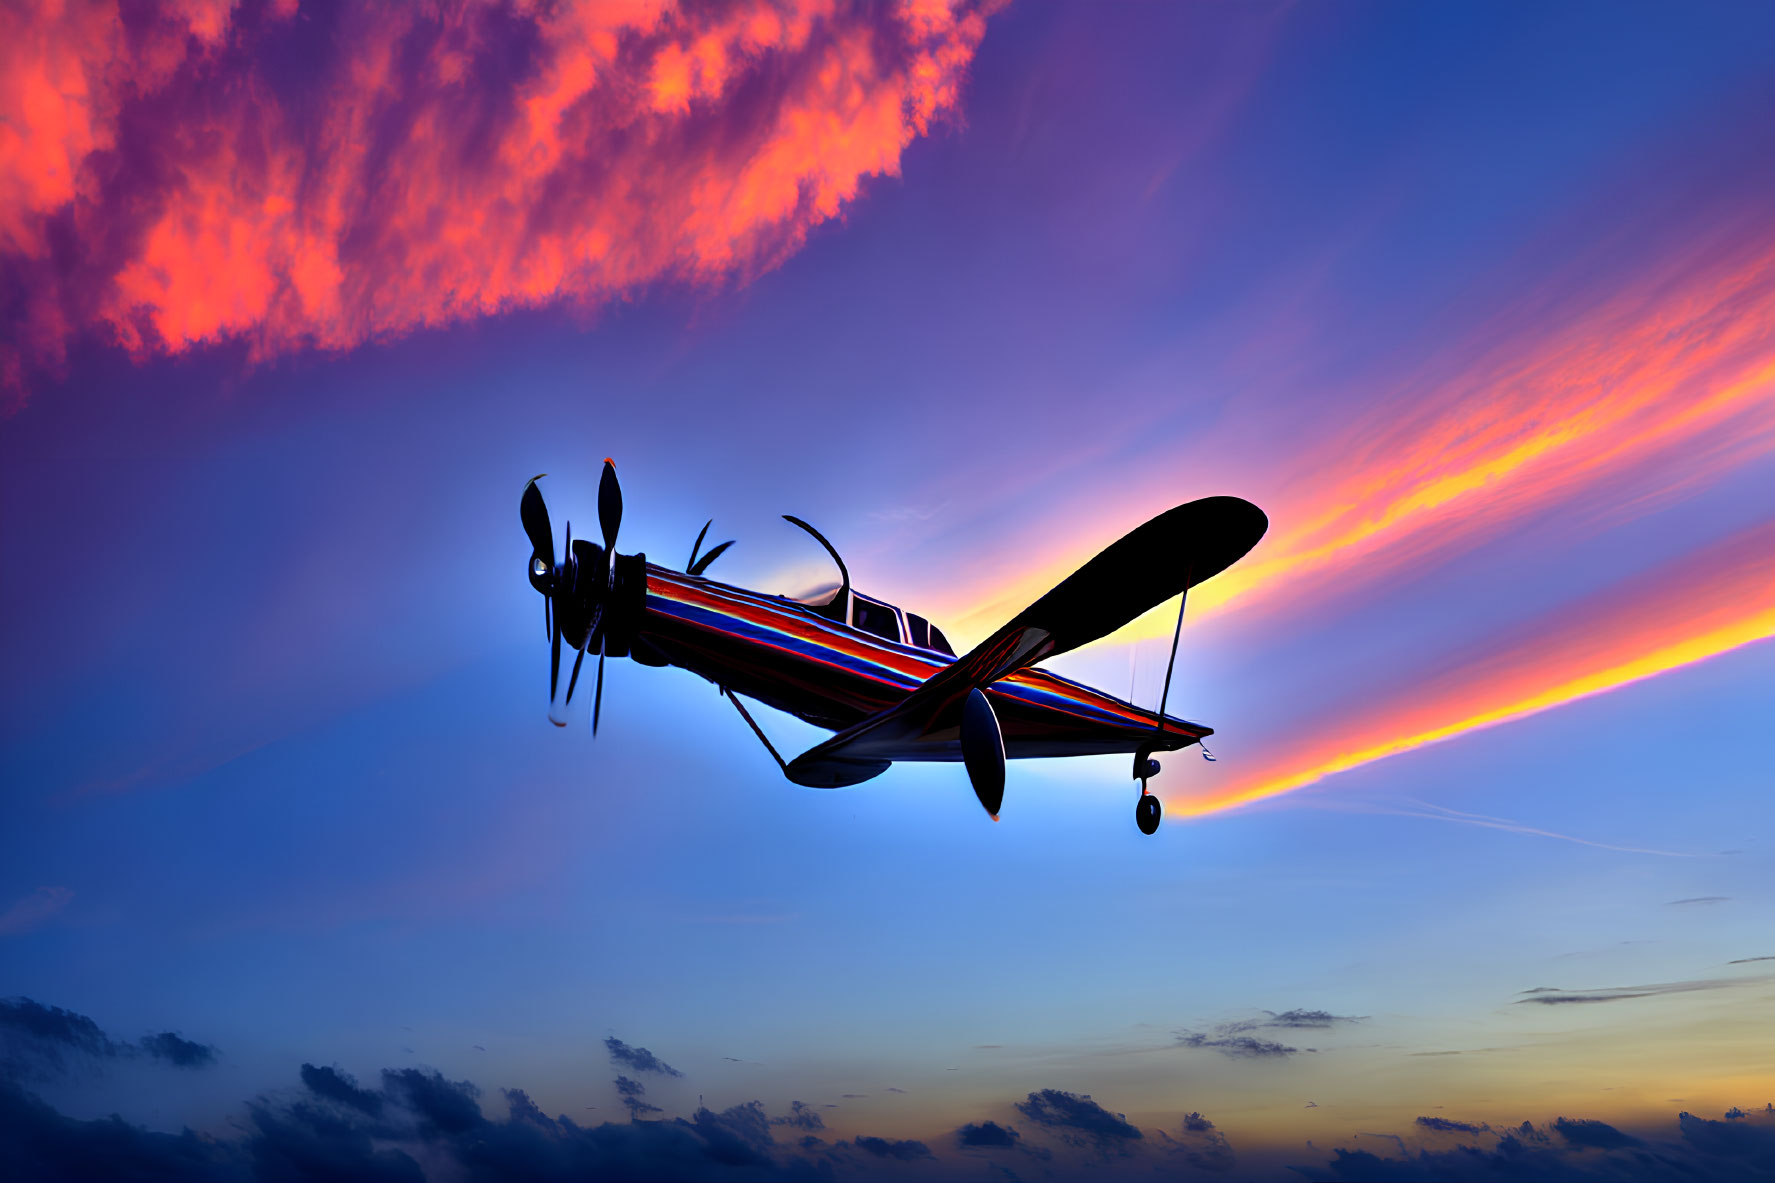 Biplane silhouette in vibrant sunset sky